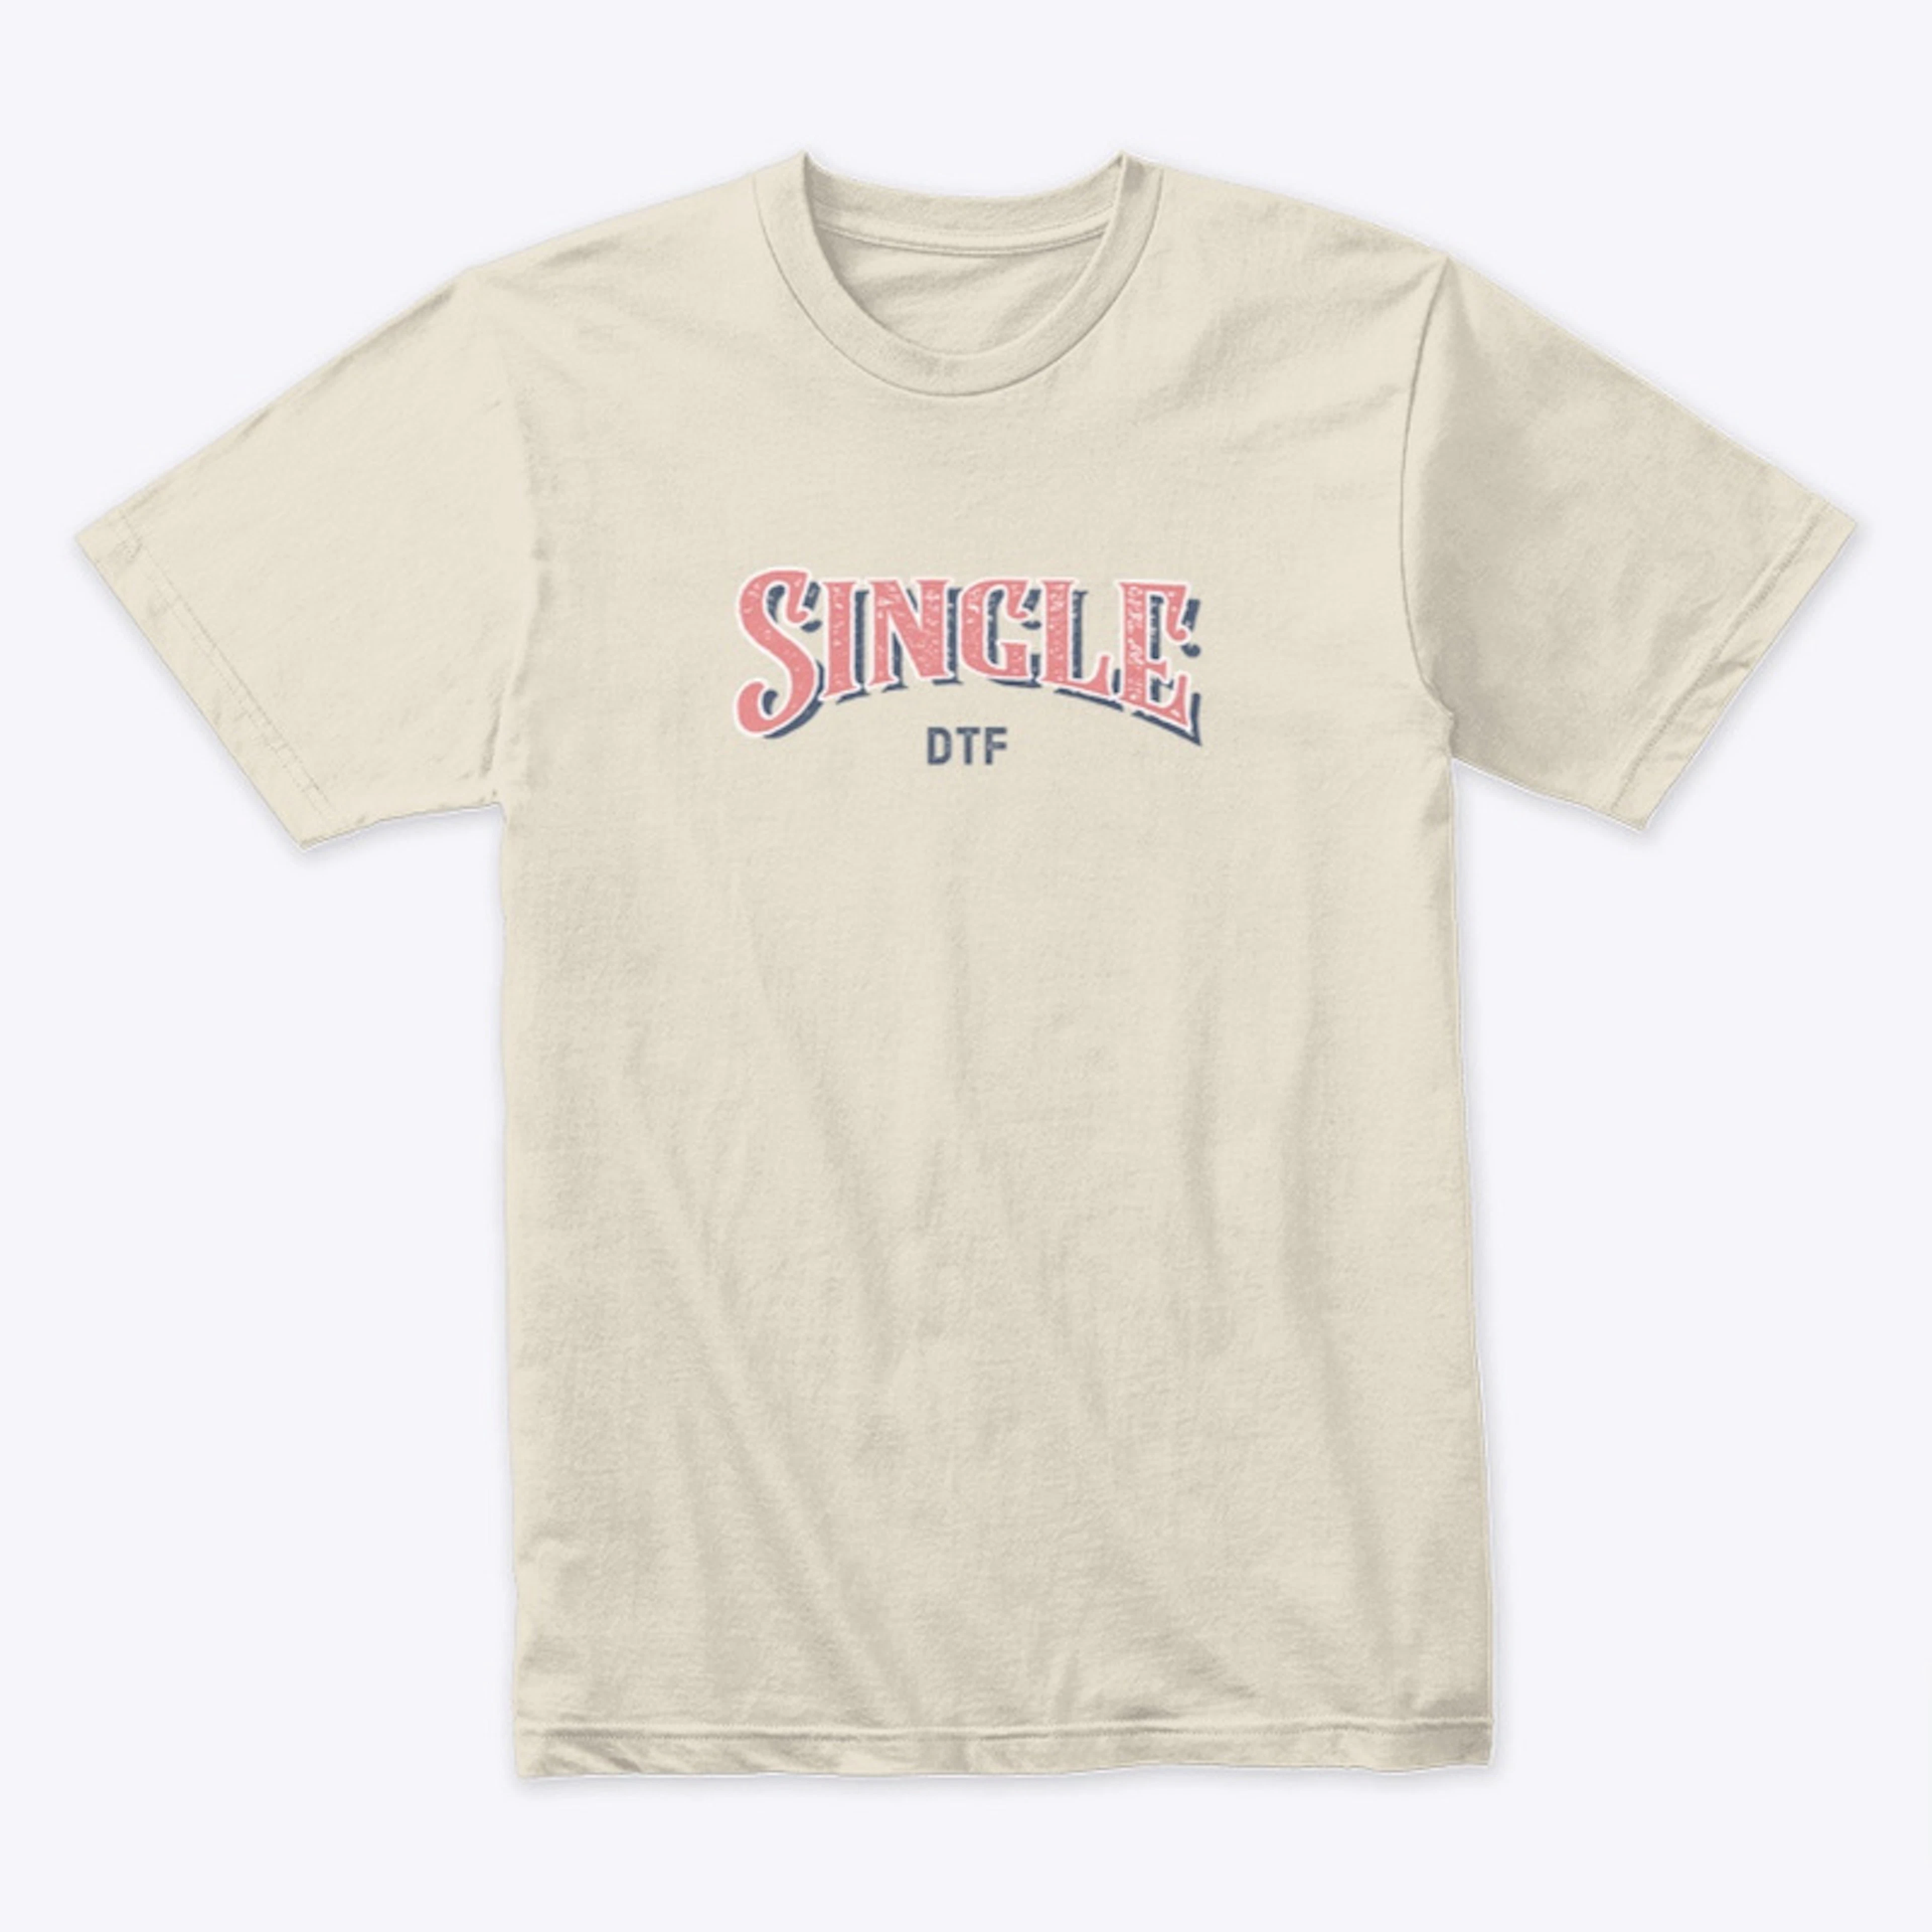 Single apparel.